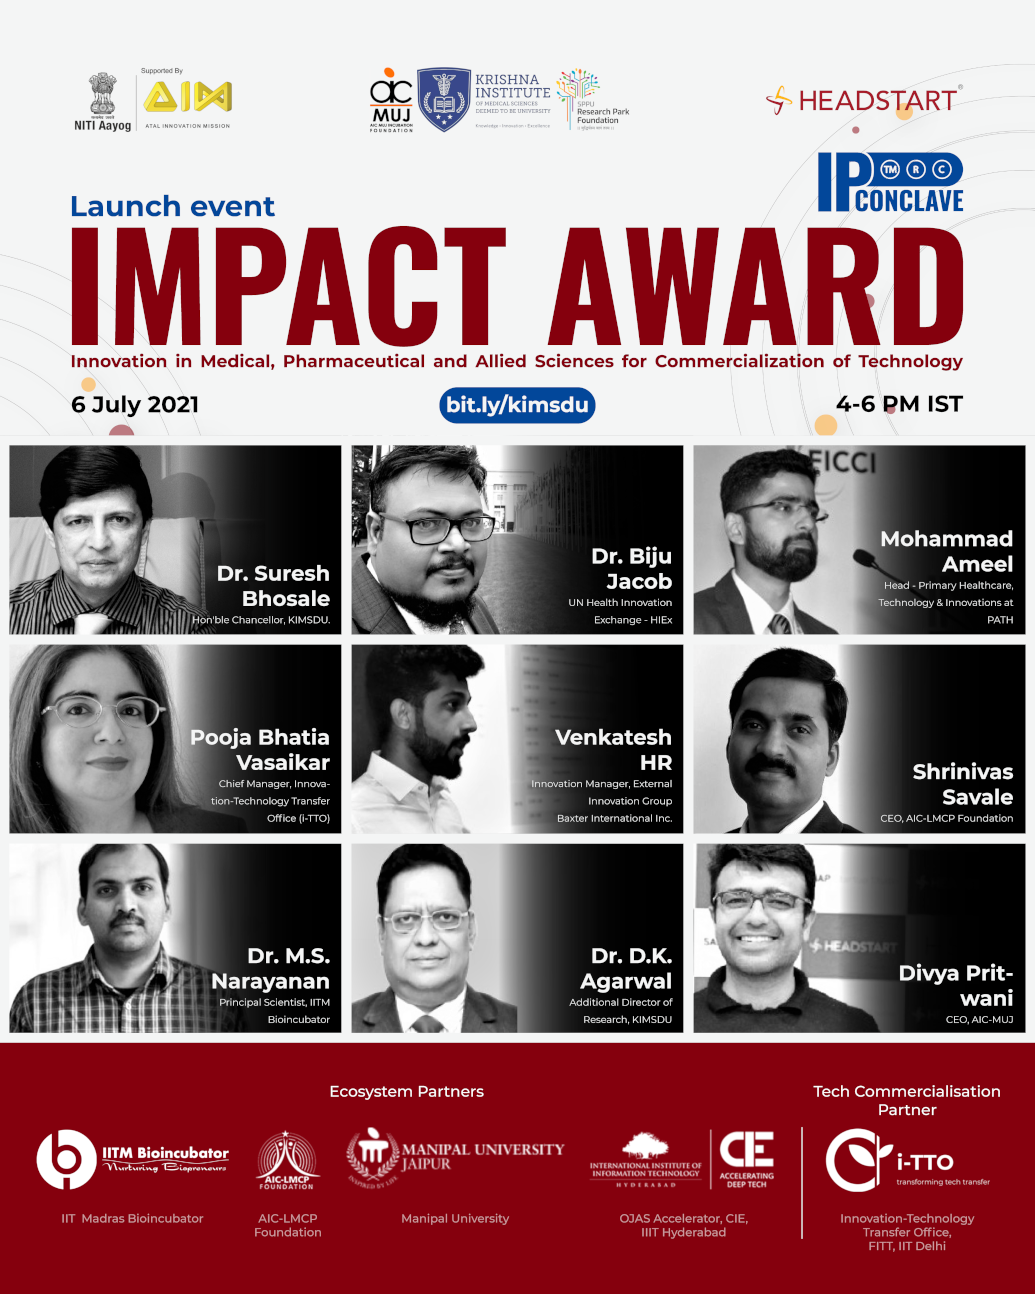 impact award